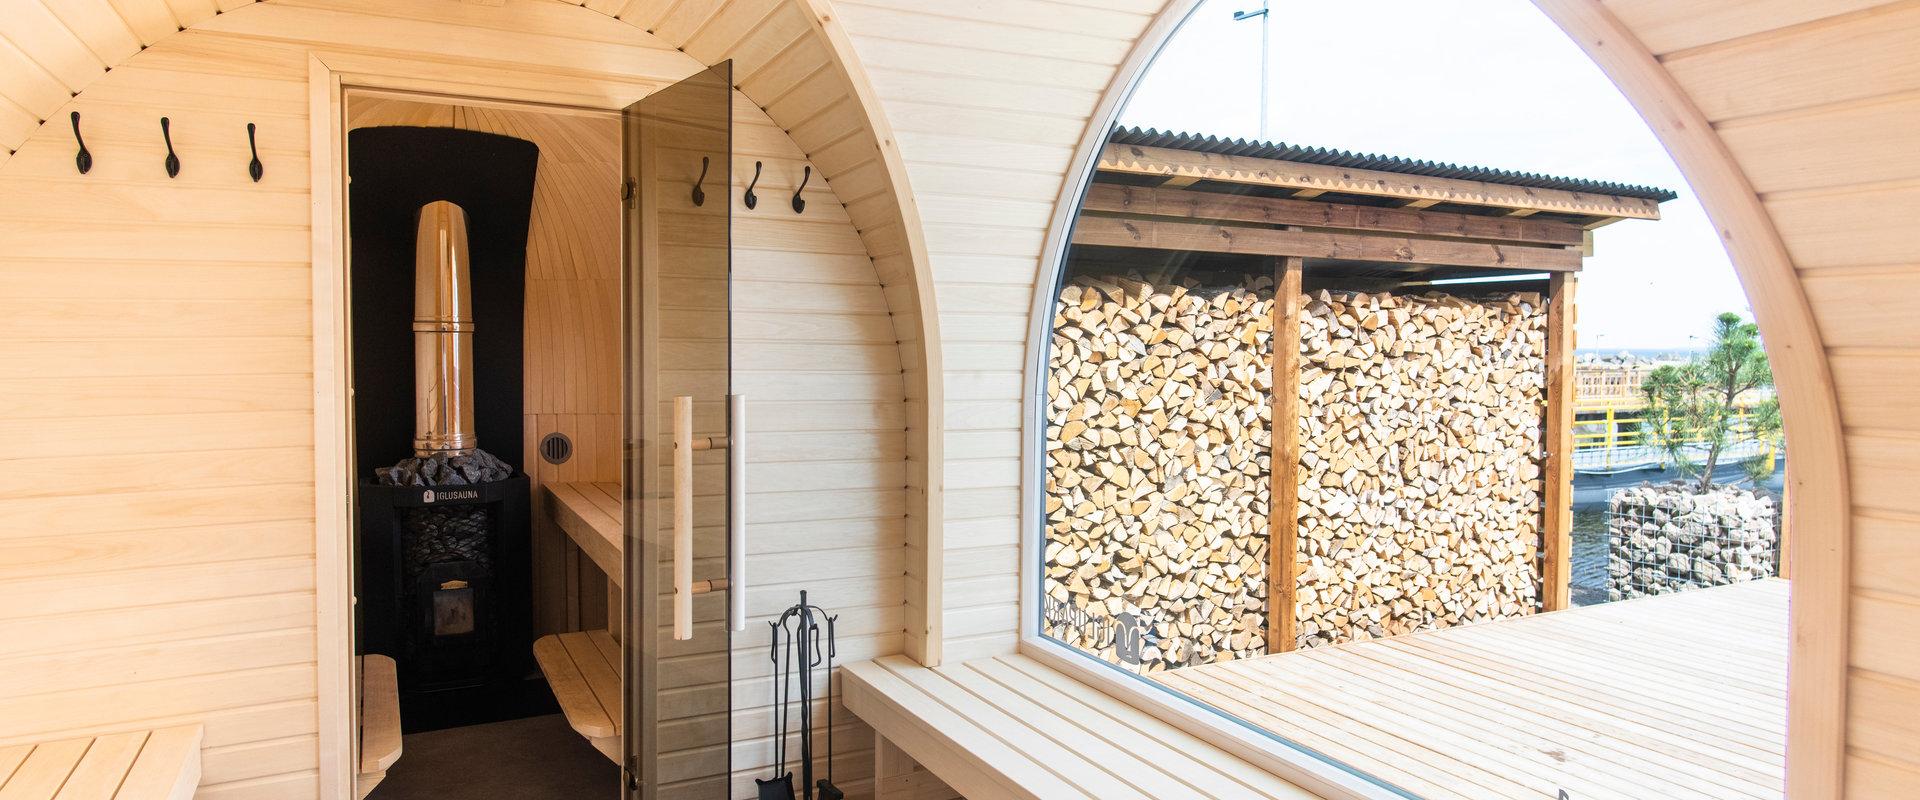 Iglupark igloo saunas